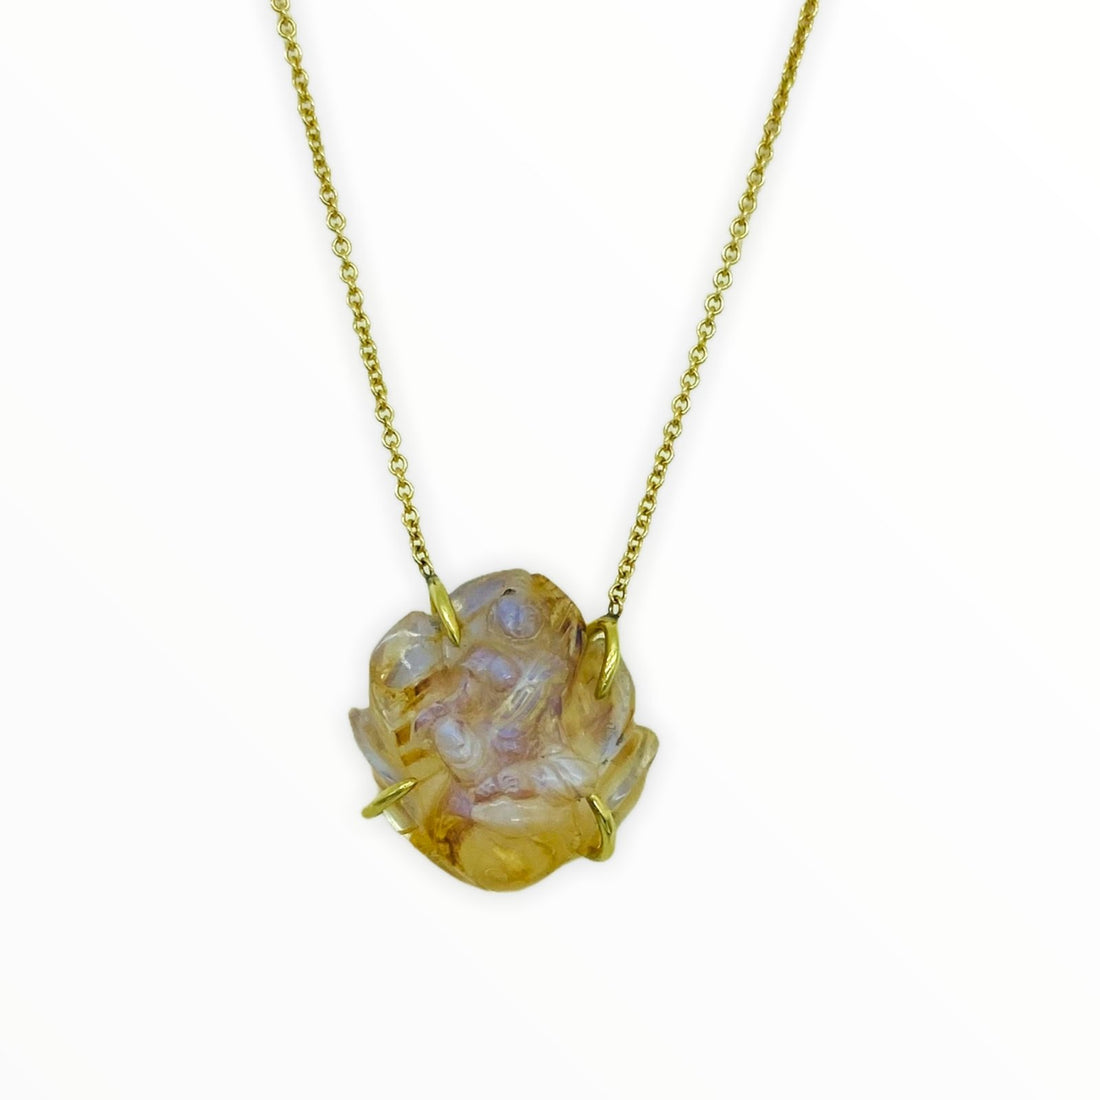 Moonstone Buddha Necklace - Ele Keats Jewelry